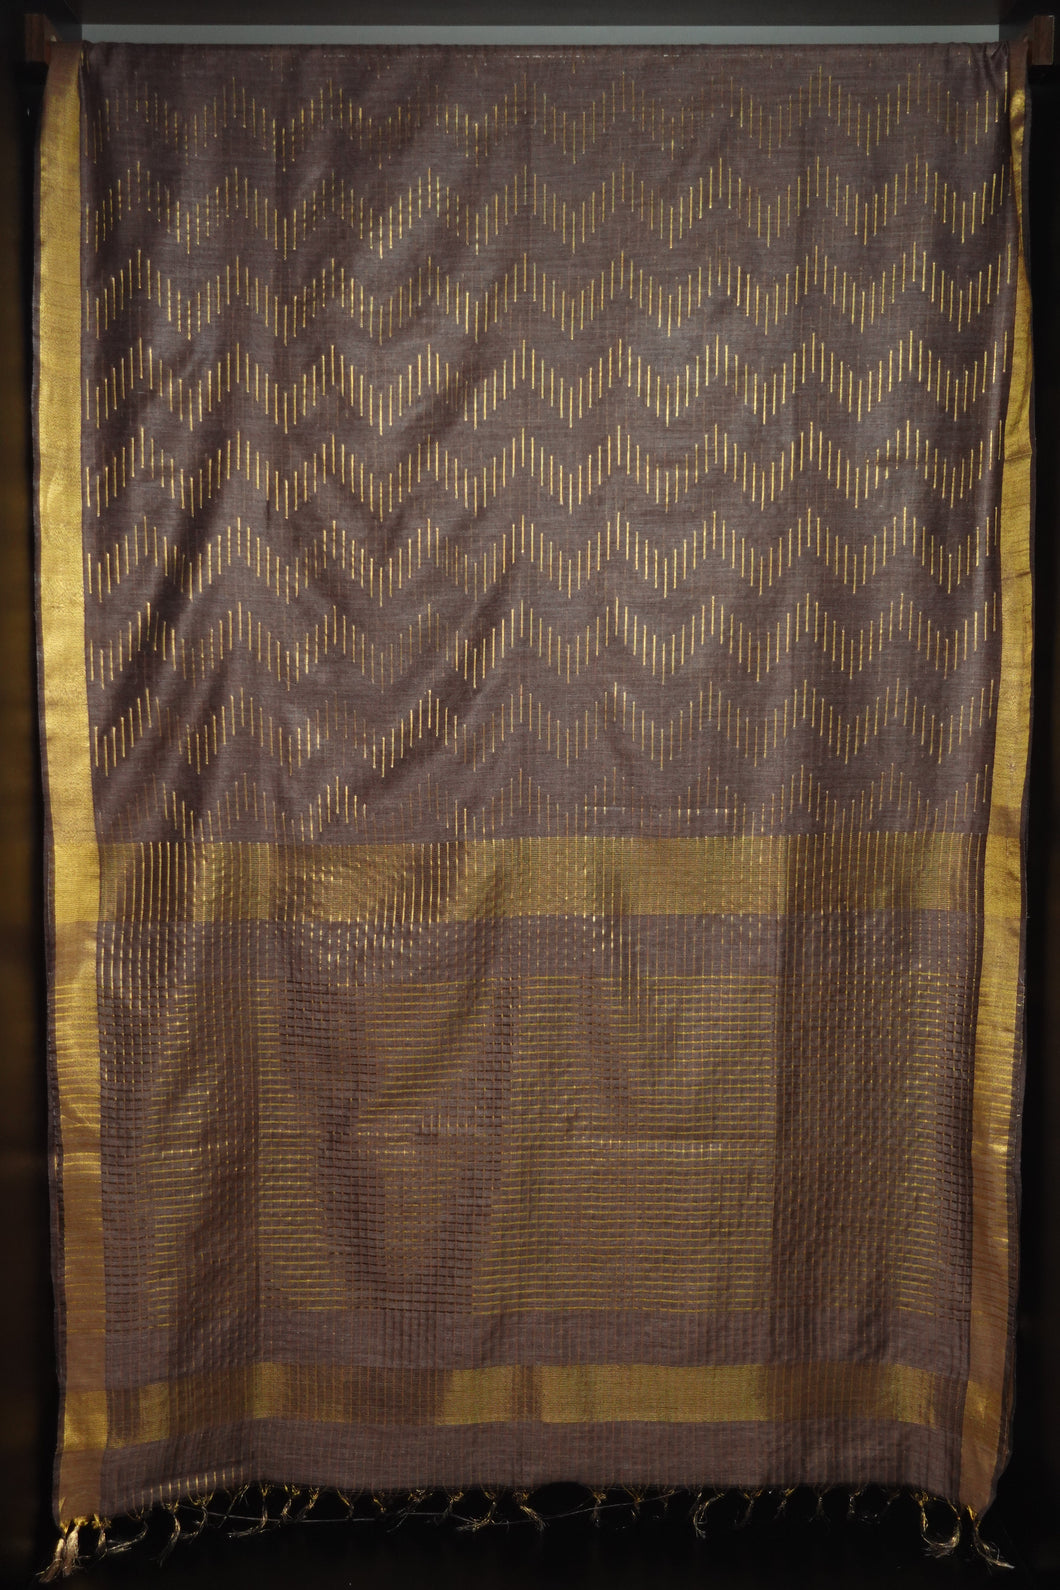 Bhagalpuri linen finish sarees with zari weave patterns | MRD240